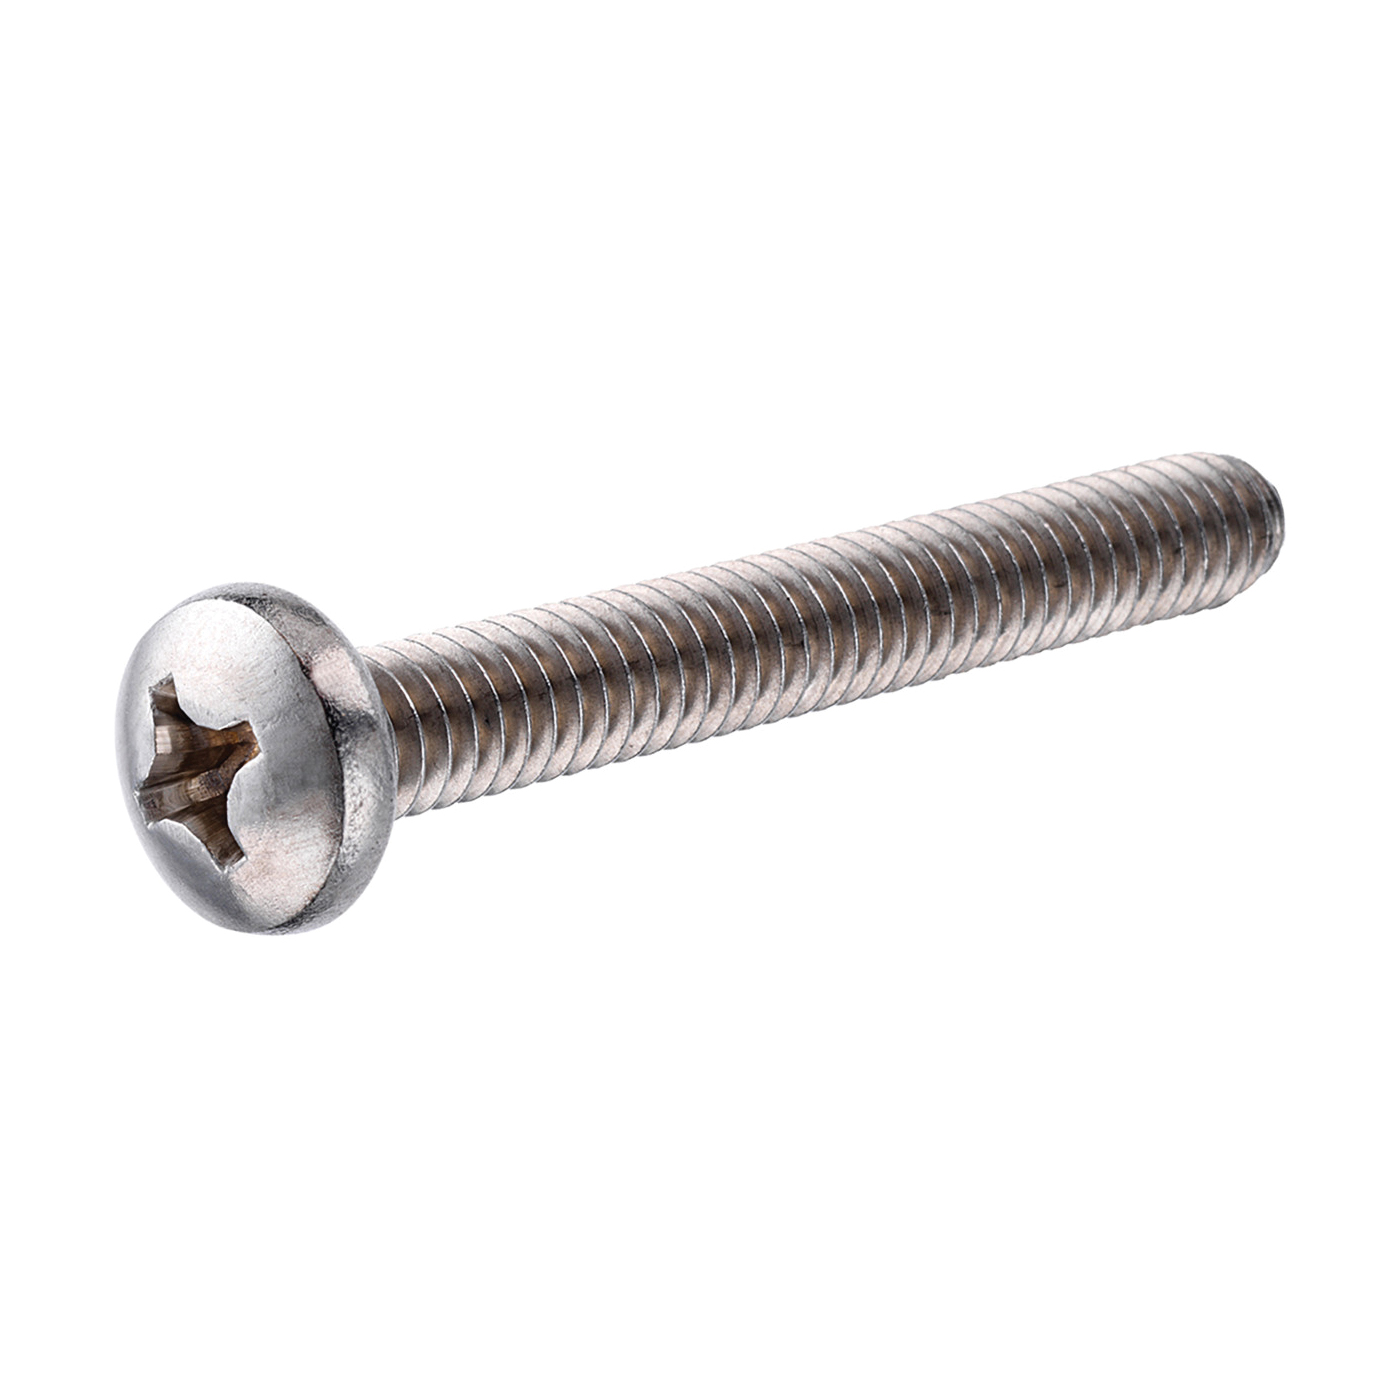 881142 Machine Screw, #3-48 Thread, 1/2 in L, Pan Head, Phillips Drive, Stainless Steel